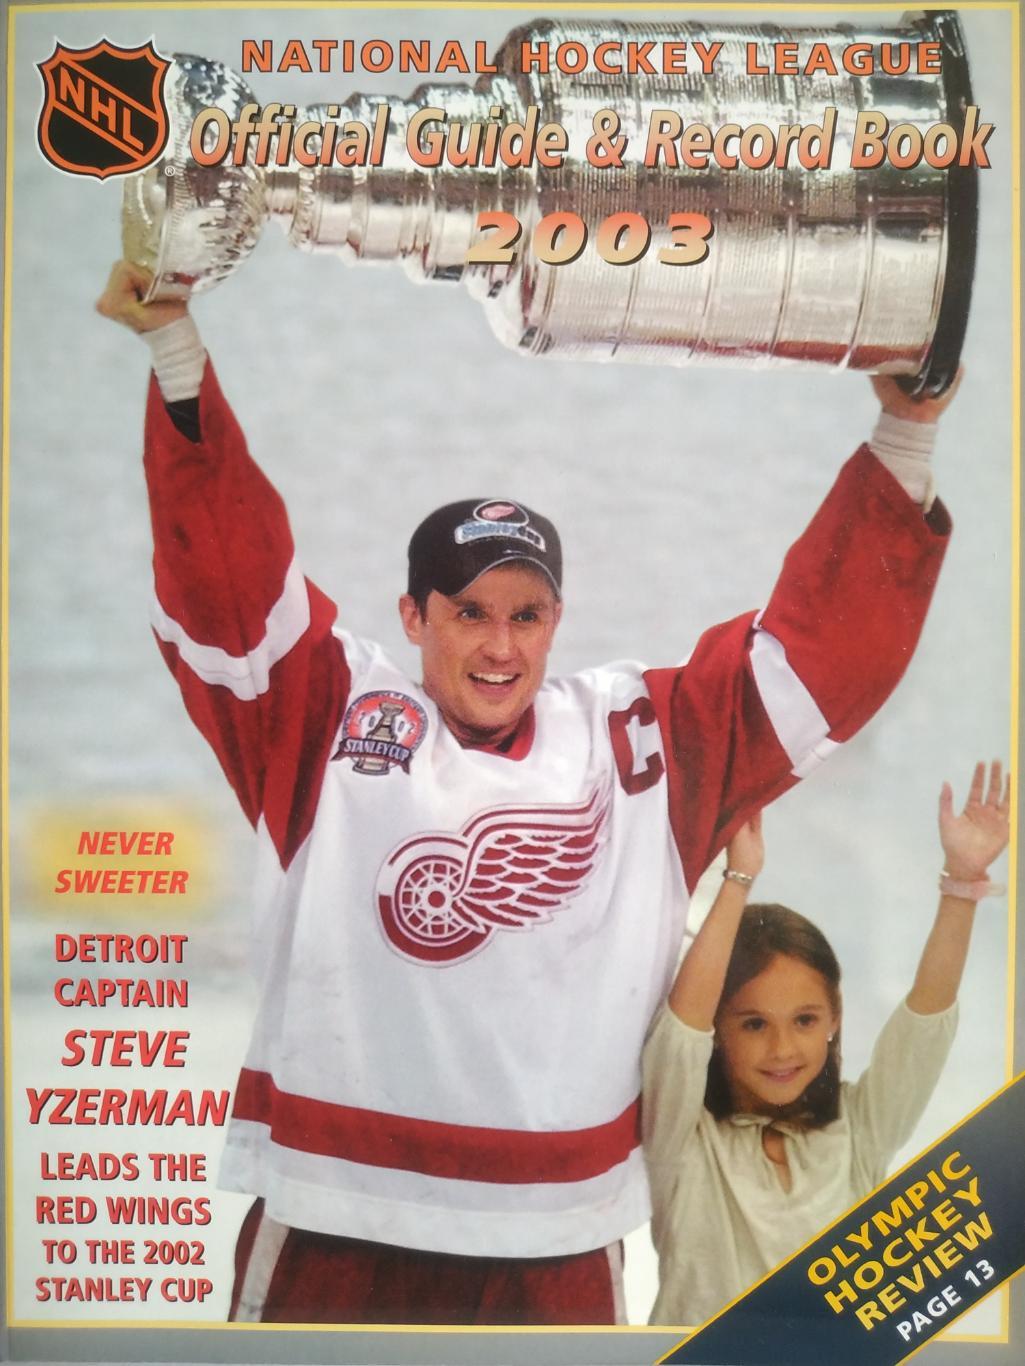 ХОККЕЙ ОФИЦИАЛЬНЫЙ СПРАВОЧНИК НХЛ 2003 NHL OFFICIAL GUIDE AND RECORD BOOK